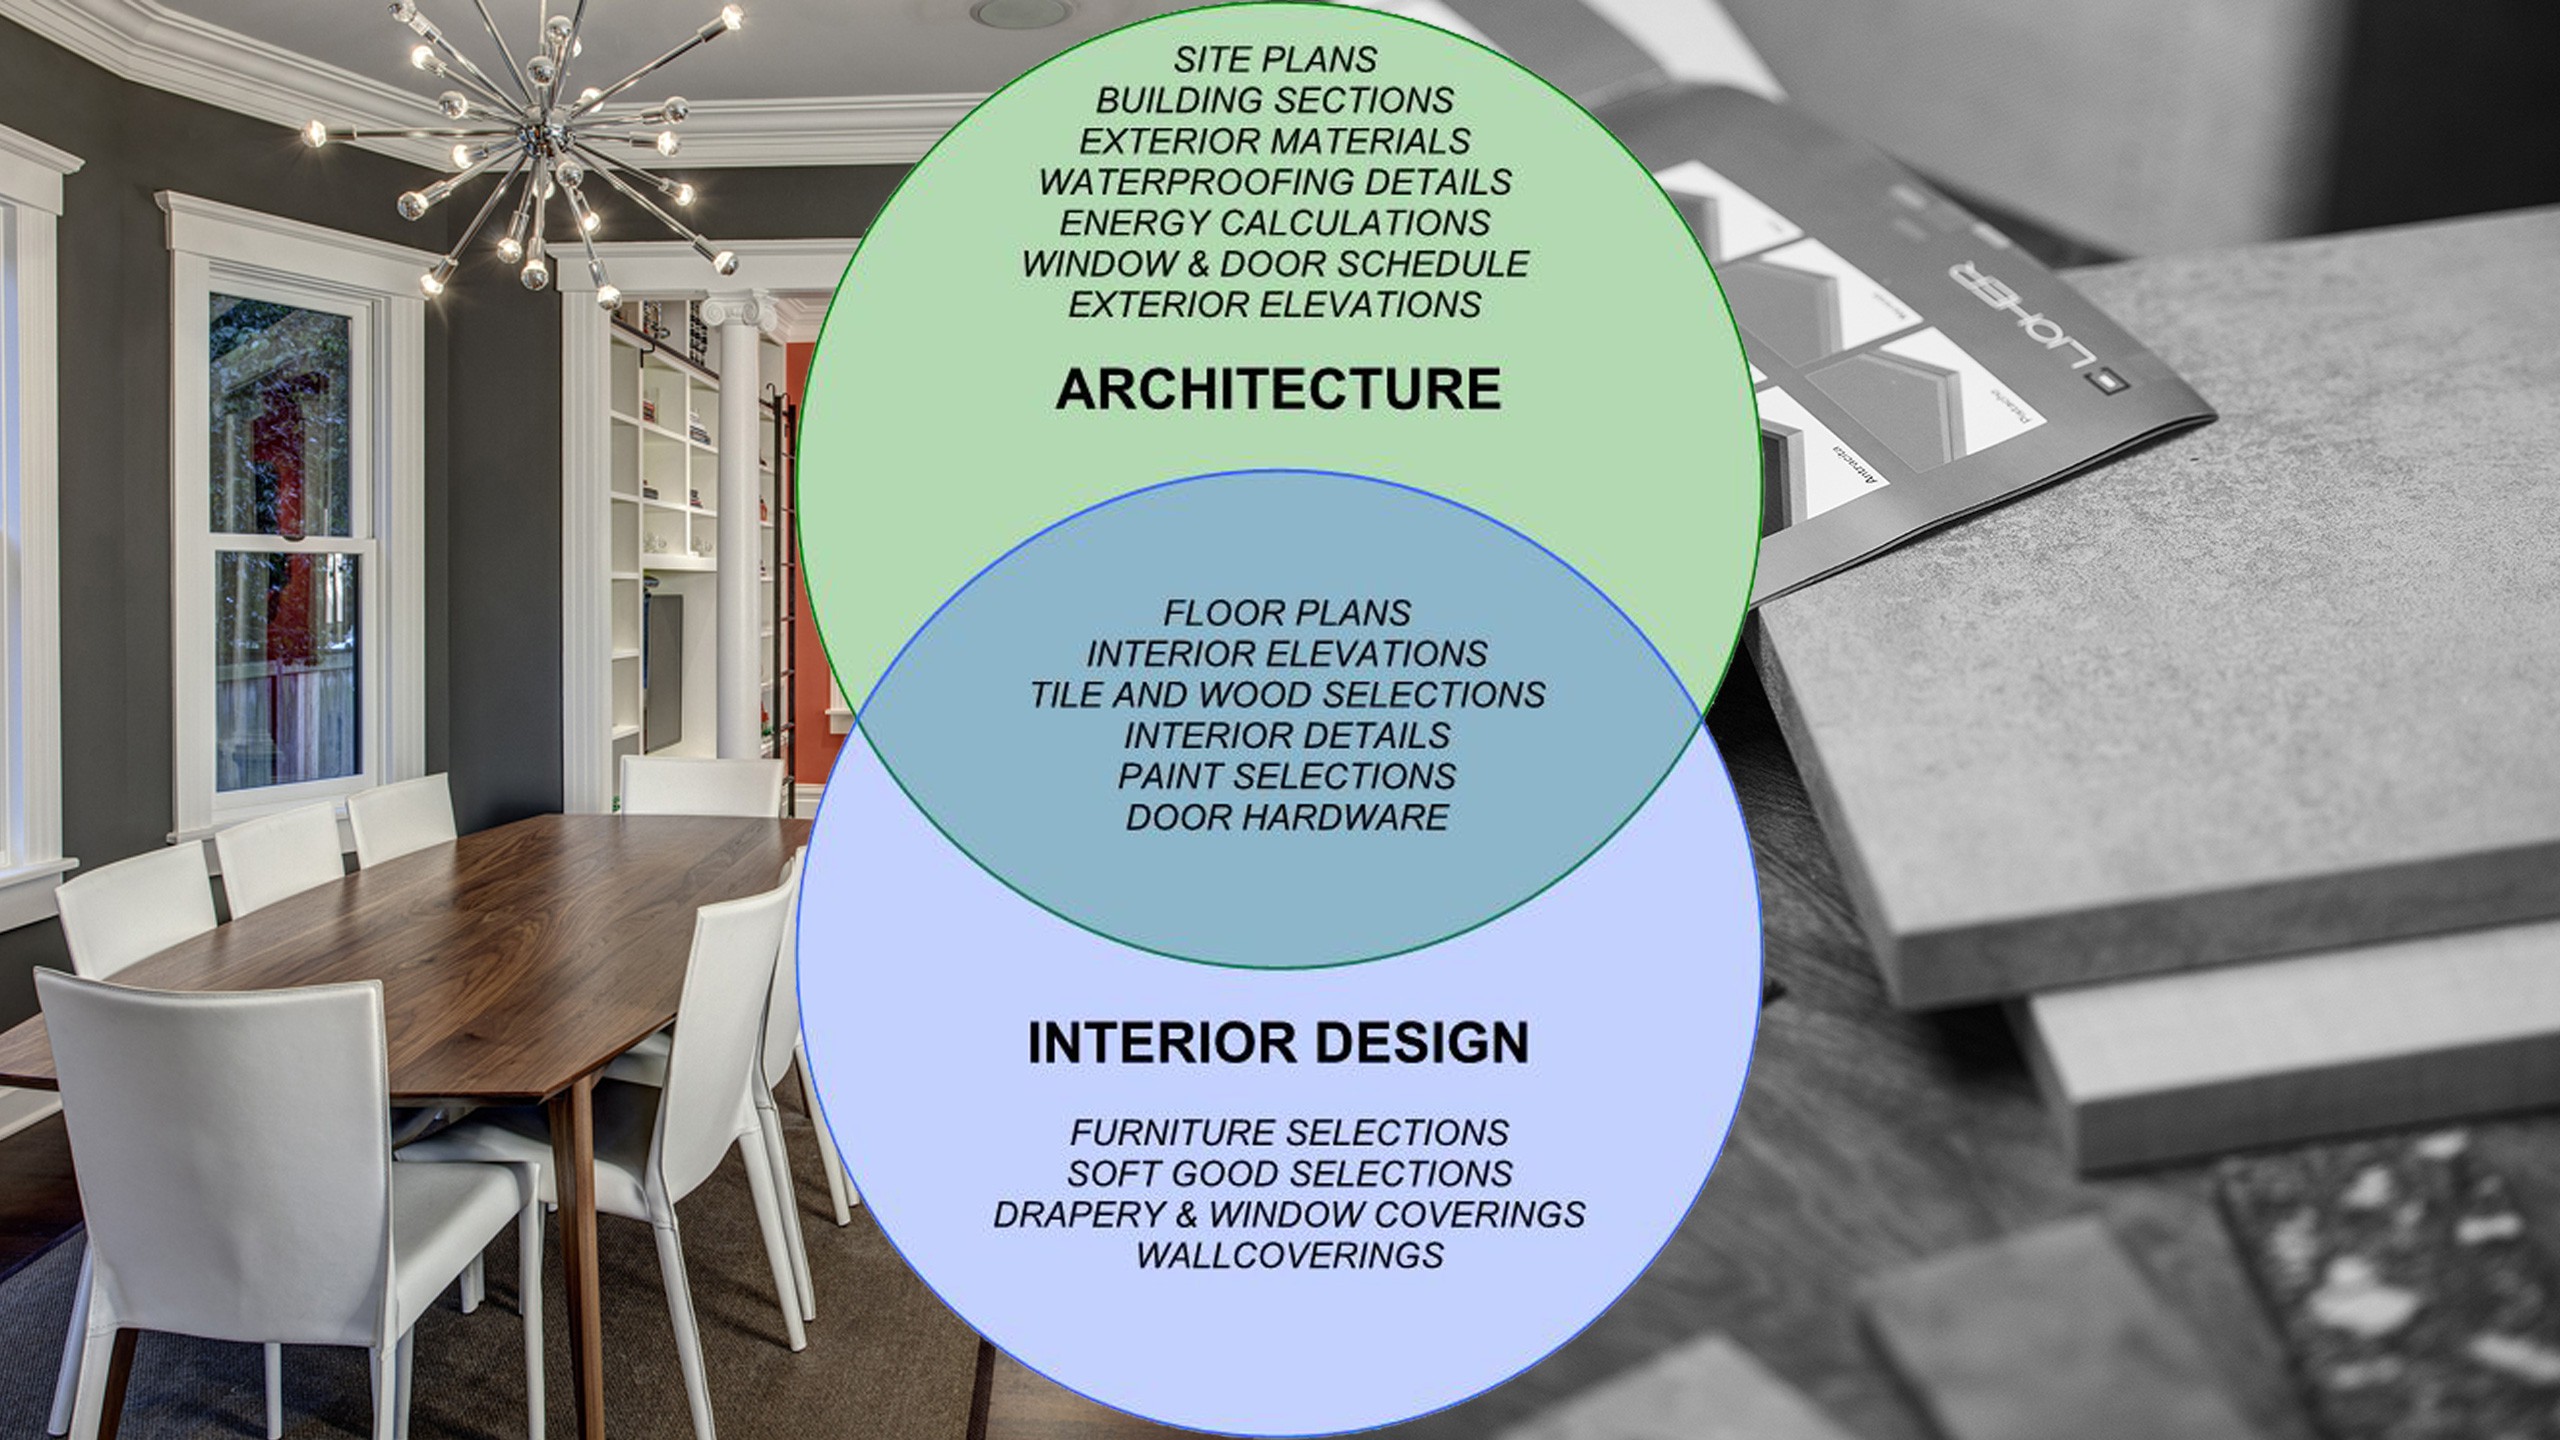 Architecture And Interior Design Featured Image 2560x1440 